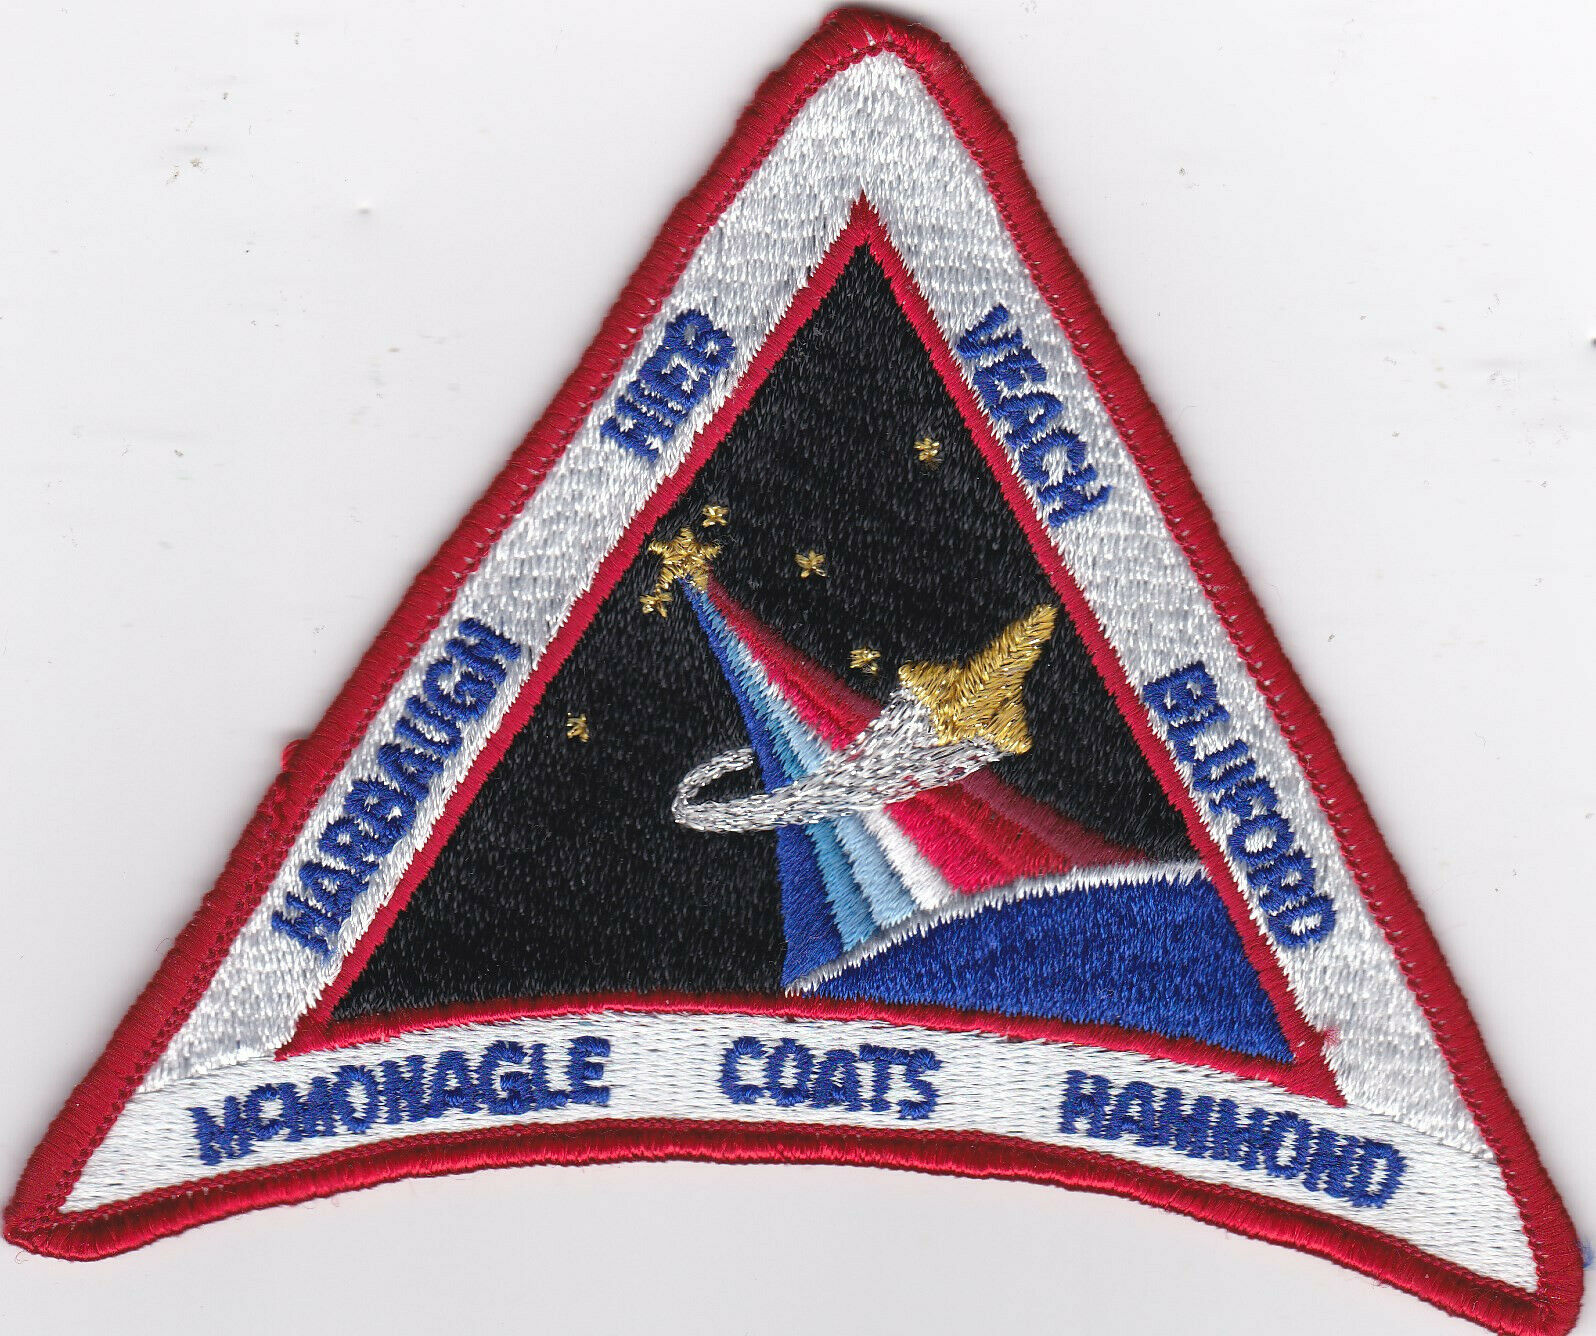 NASA ORIGINAL STS-39 MCMONAGLE-COATS-HAMMOND CREW PATCH SILVER/GOLD WIRE